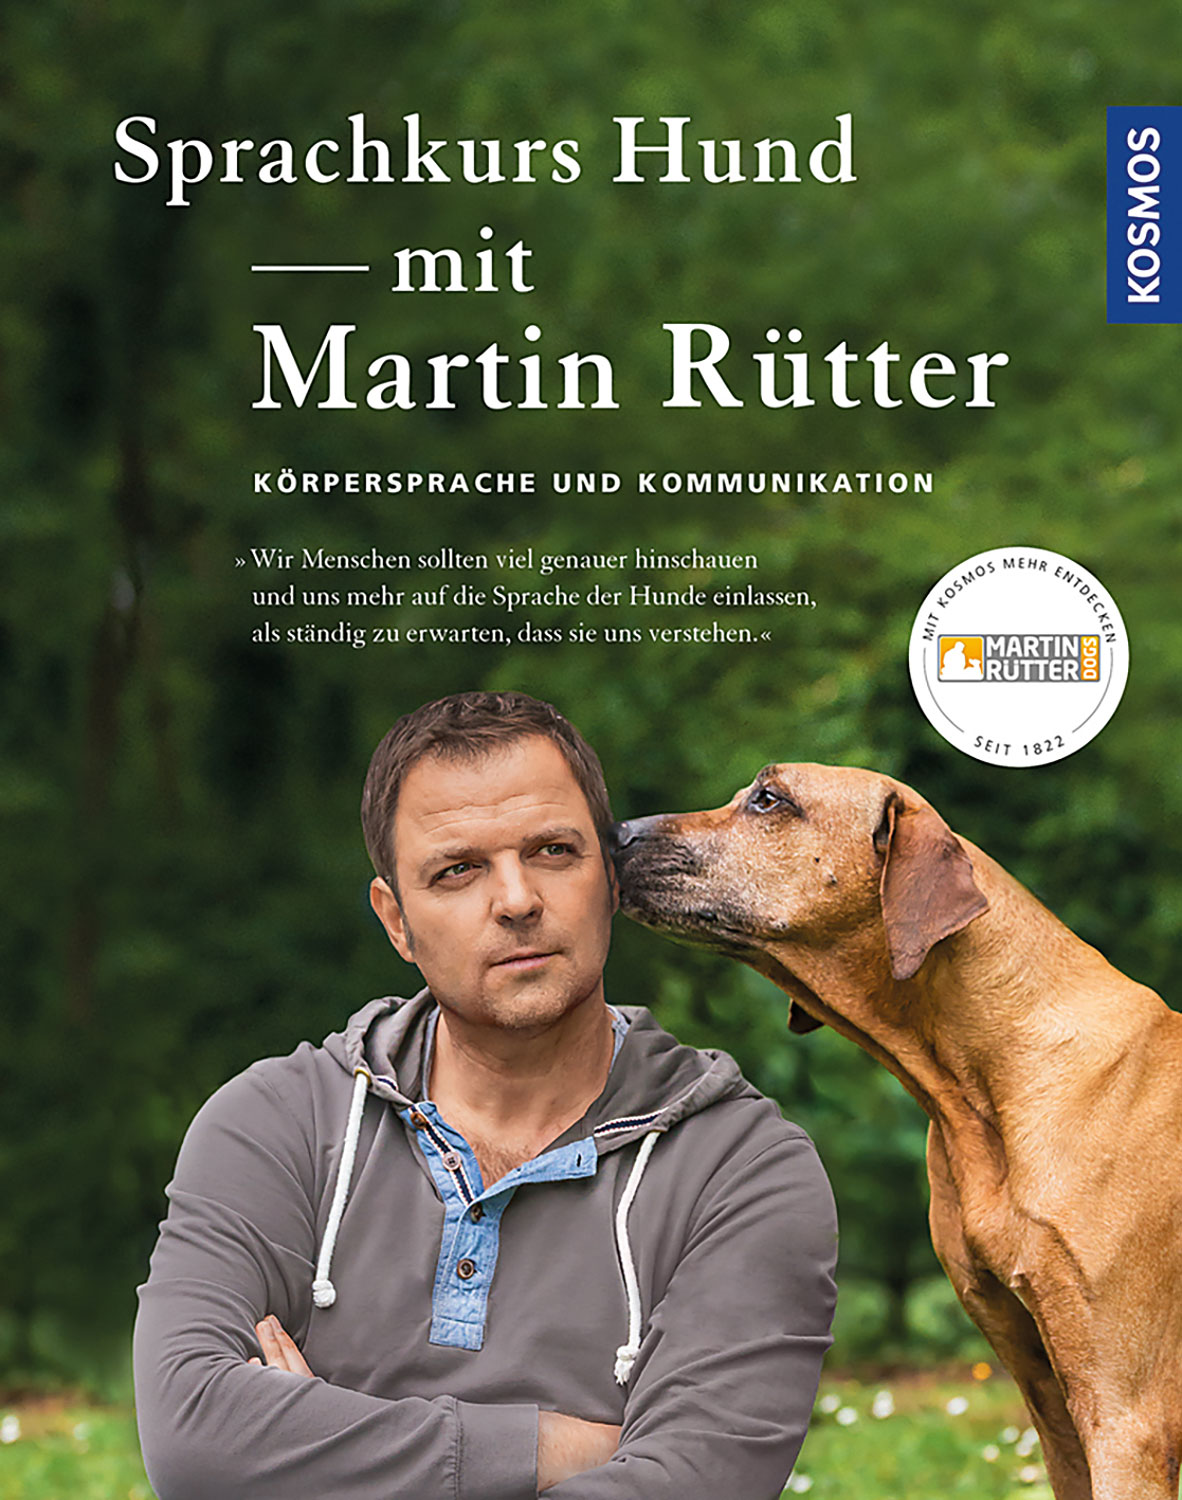 Sprachkurs Hund mit Martin Rütter - 132805